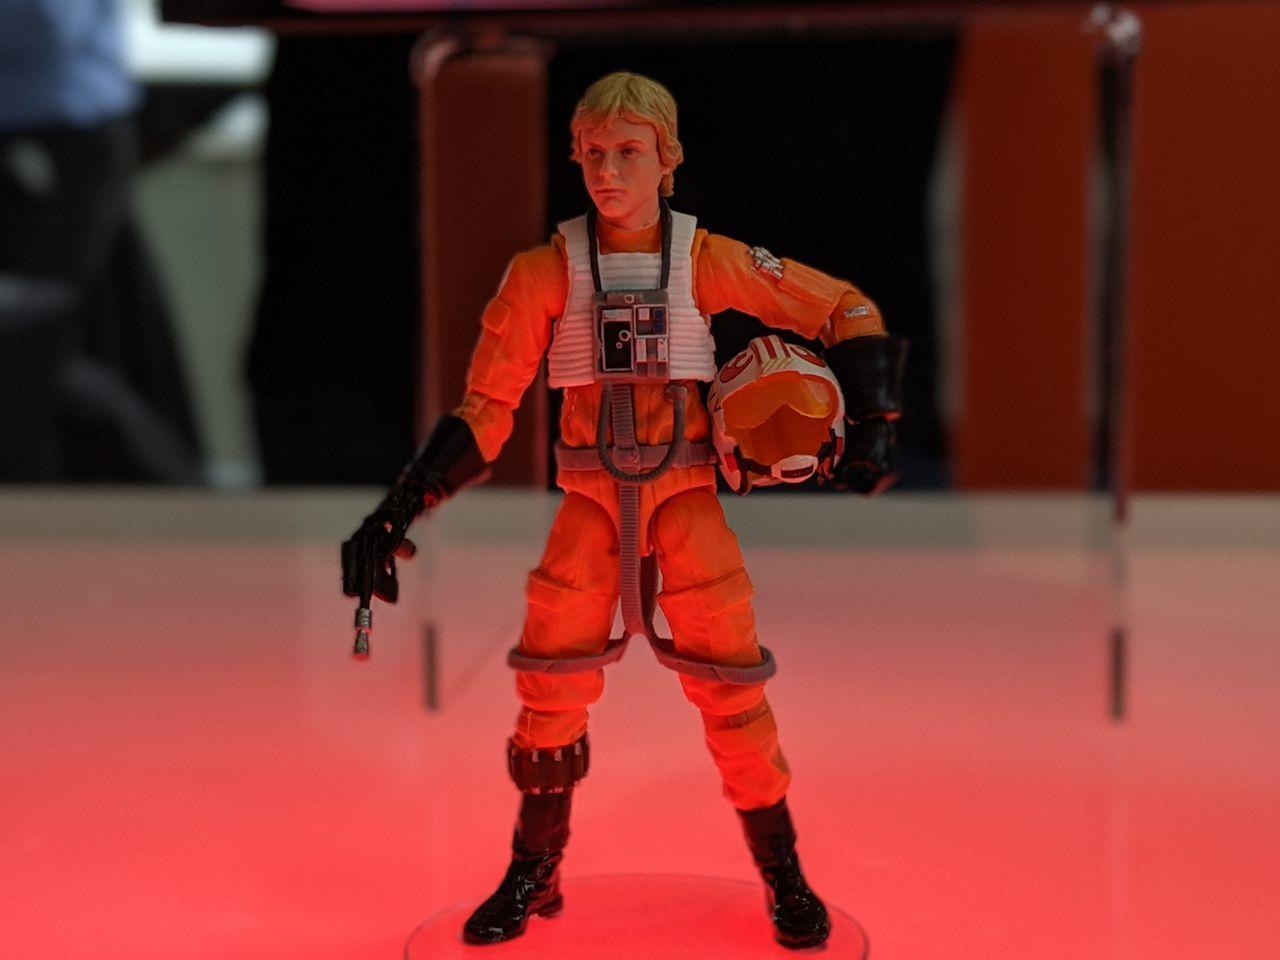 X-Wing Pilot Luke